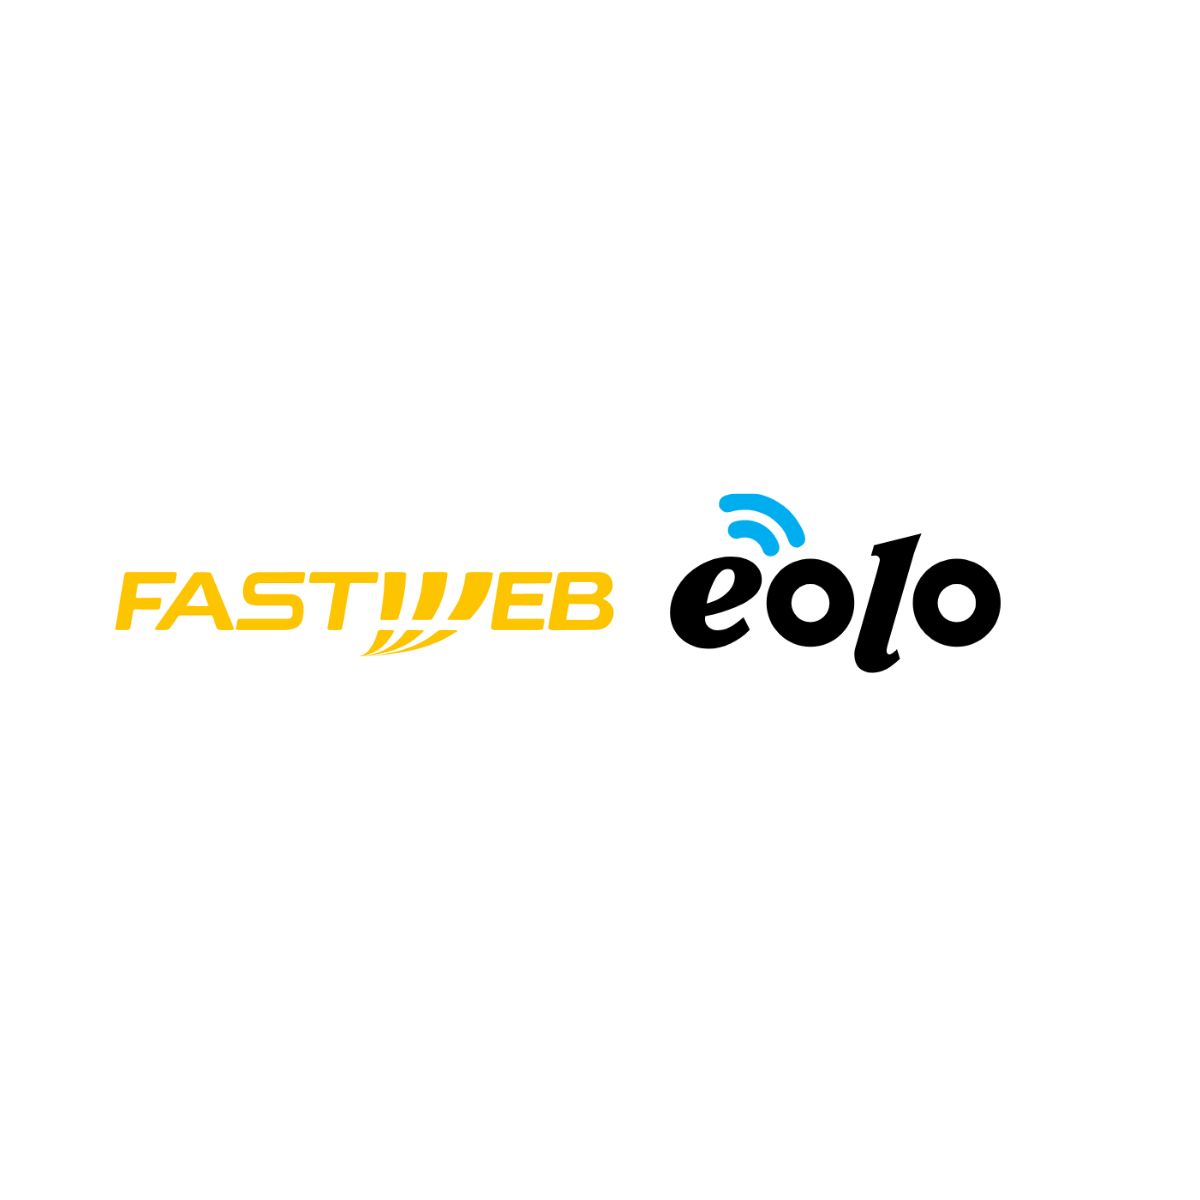 fastweb eolo